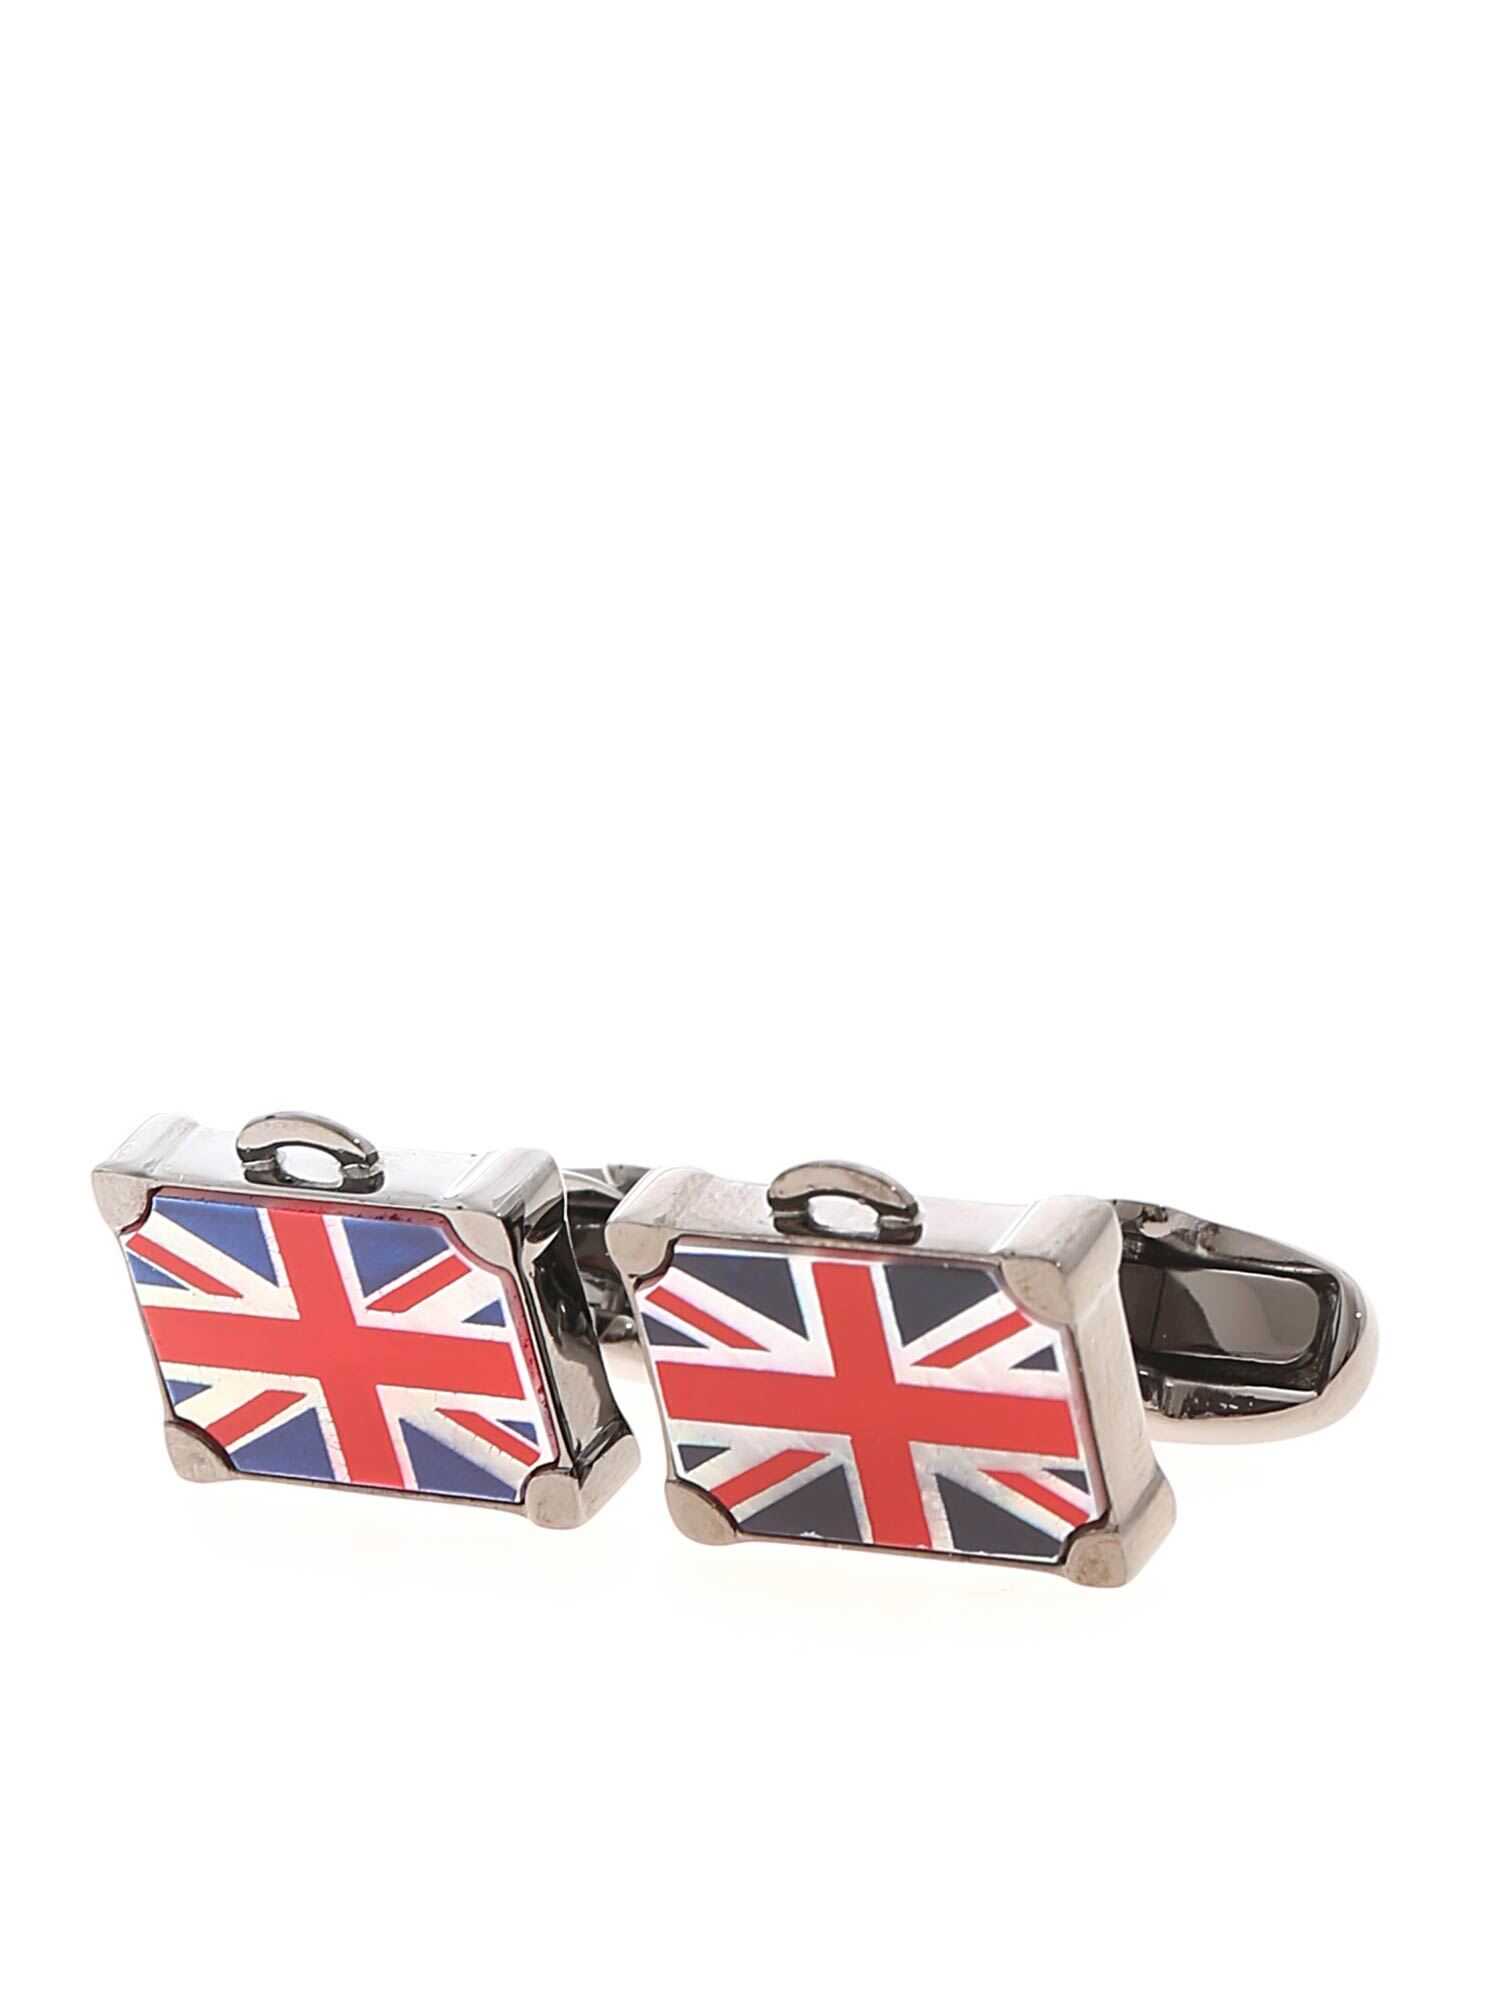 Paul Smith Flag Suitcase Cufflinks BLU image